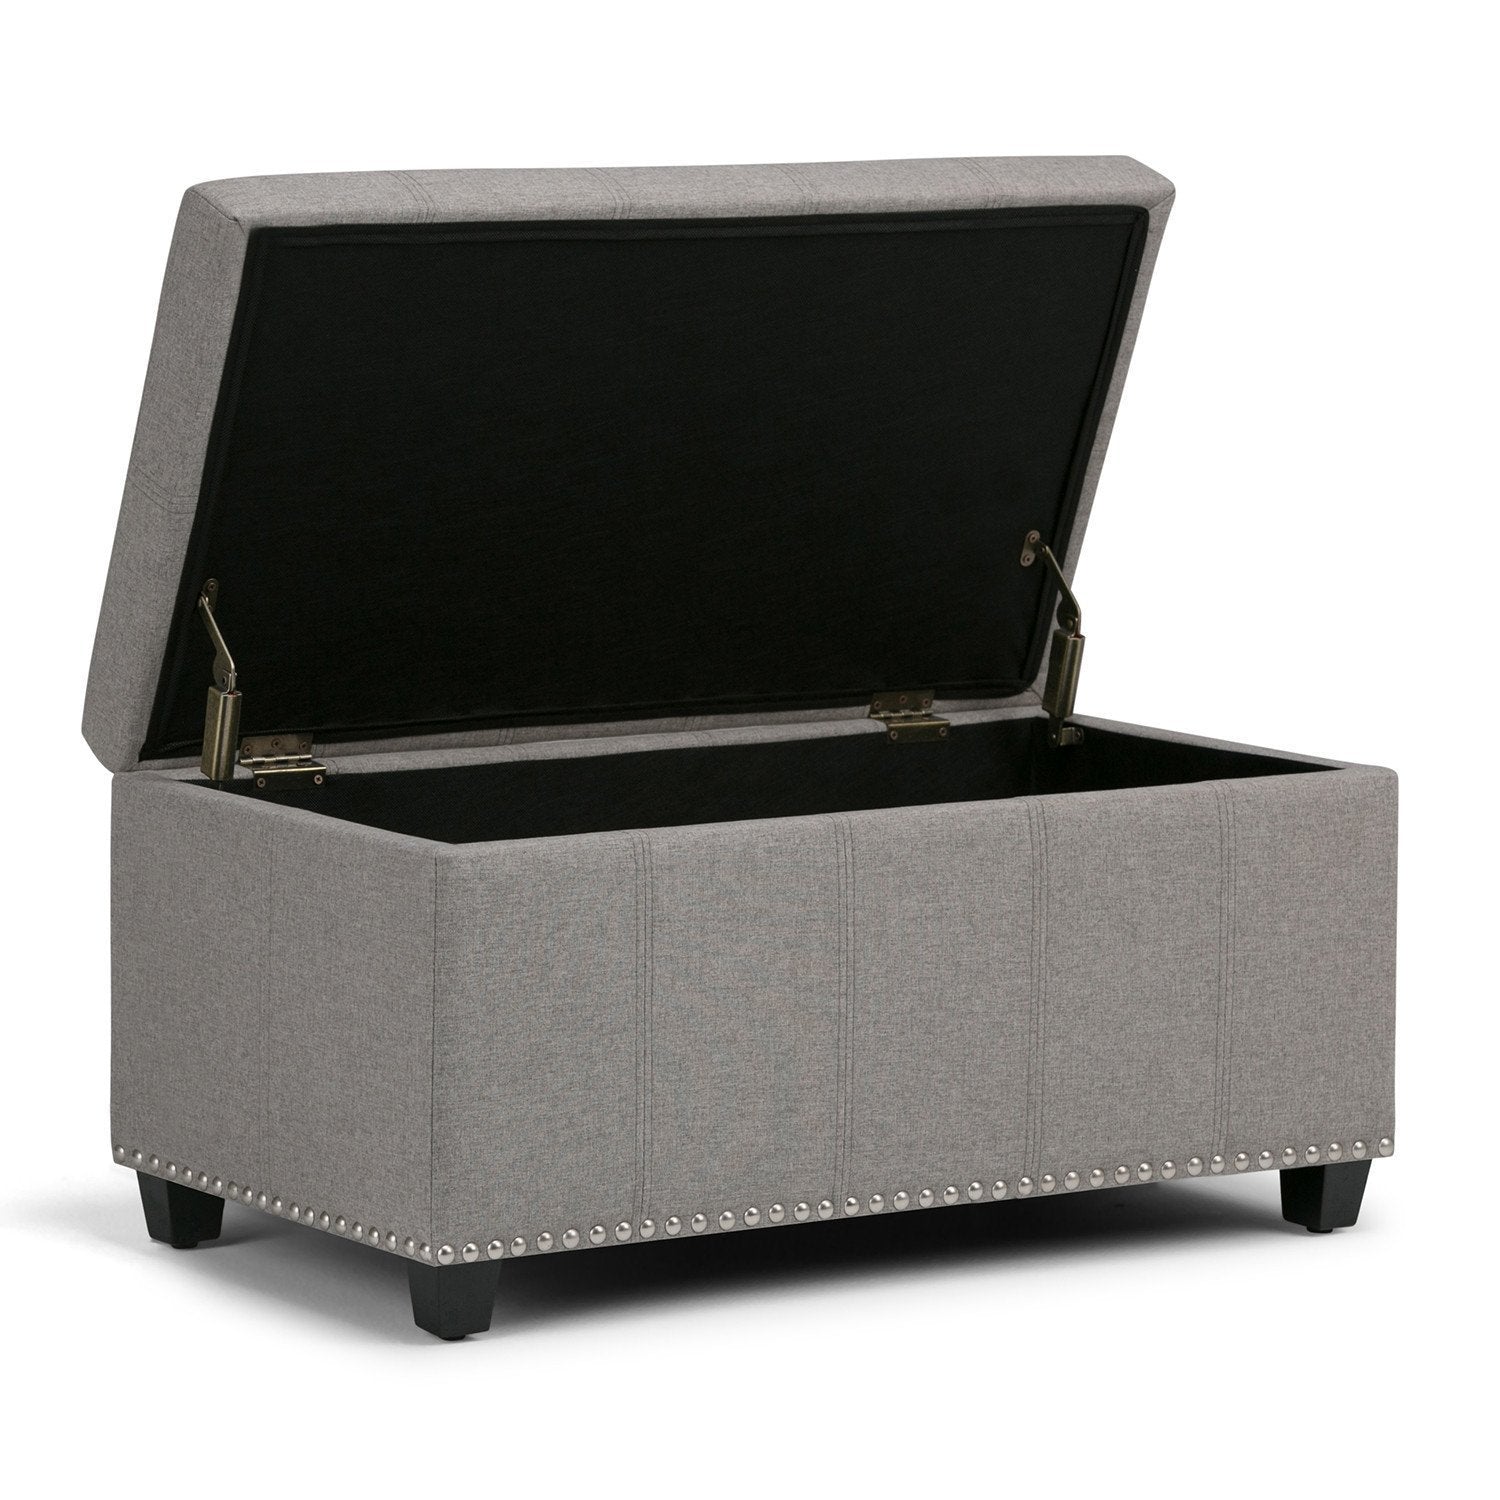 Dove Grey Linen Style Fabric | Amelia Storage Ottoman Bench